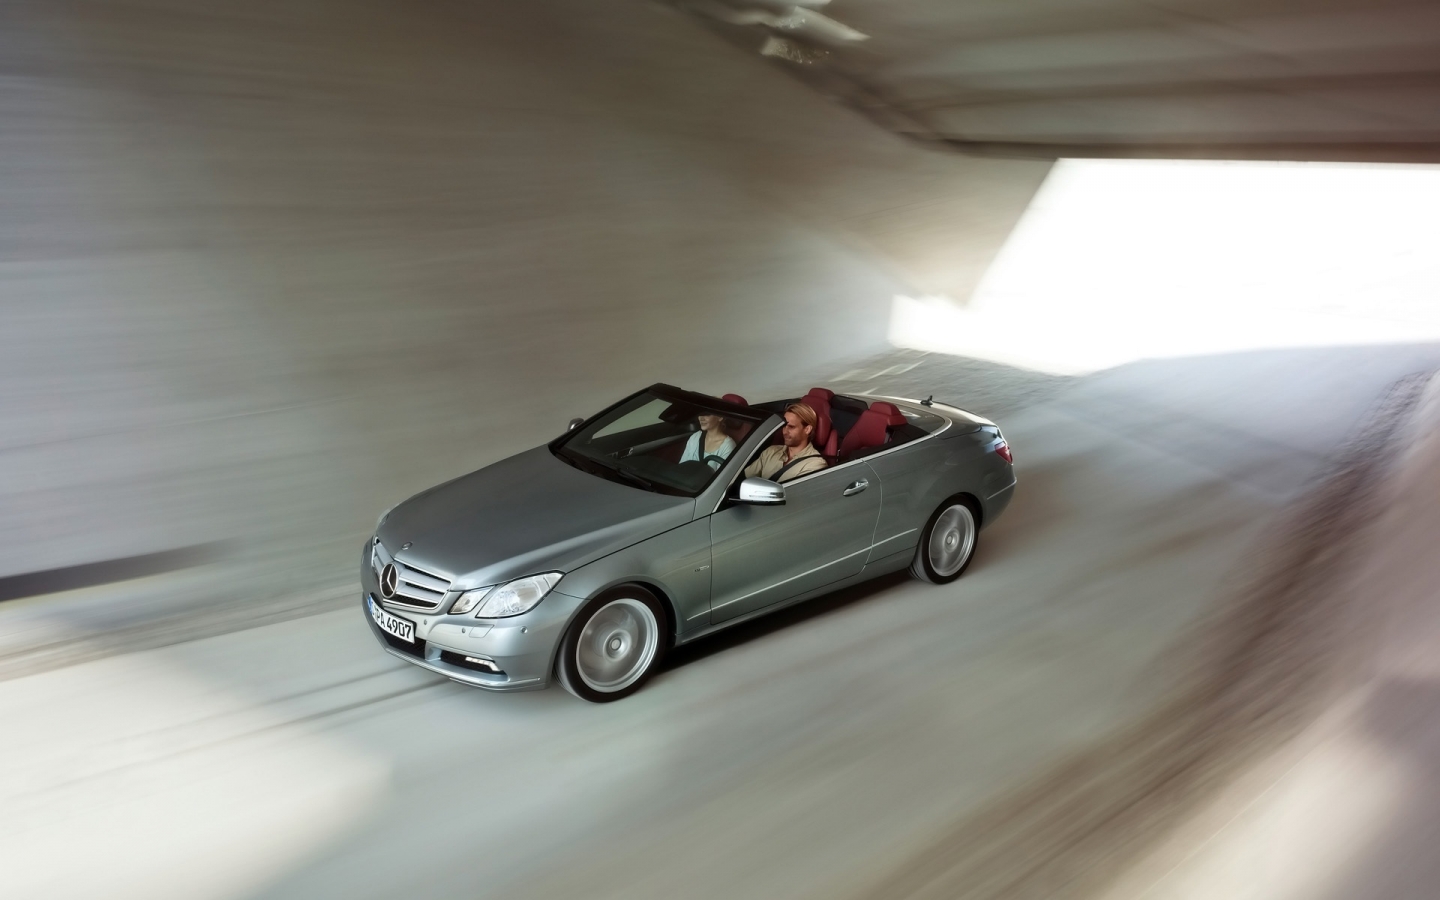 Mercedes-Benz E Class Cabriolet 2010 for 1440 x 900 widescreen resolution